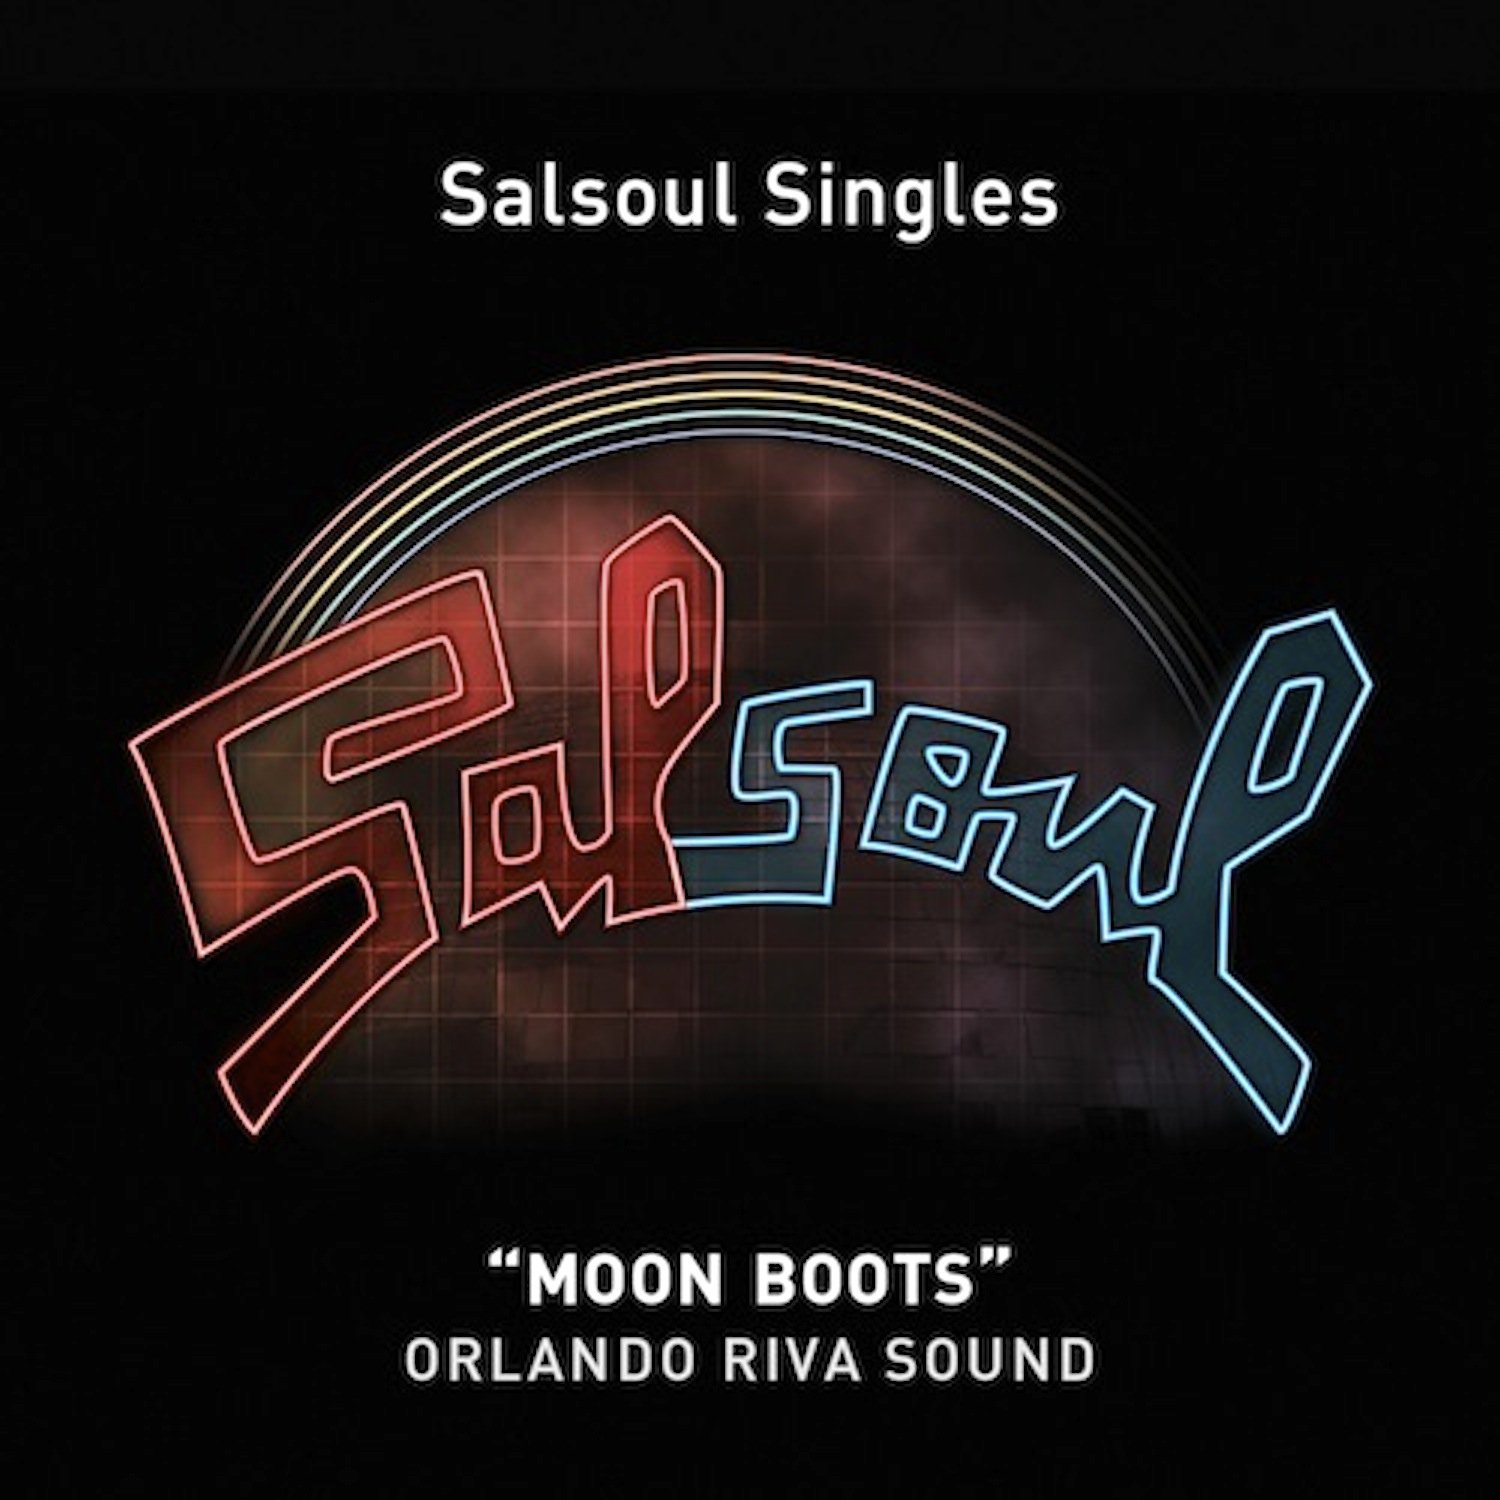 Orlando Riva Sound - Moon Boots